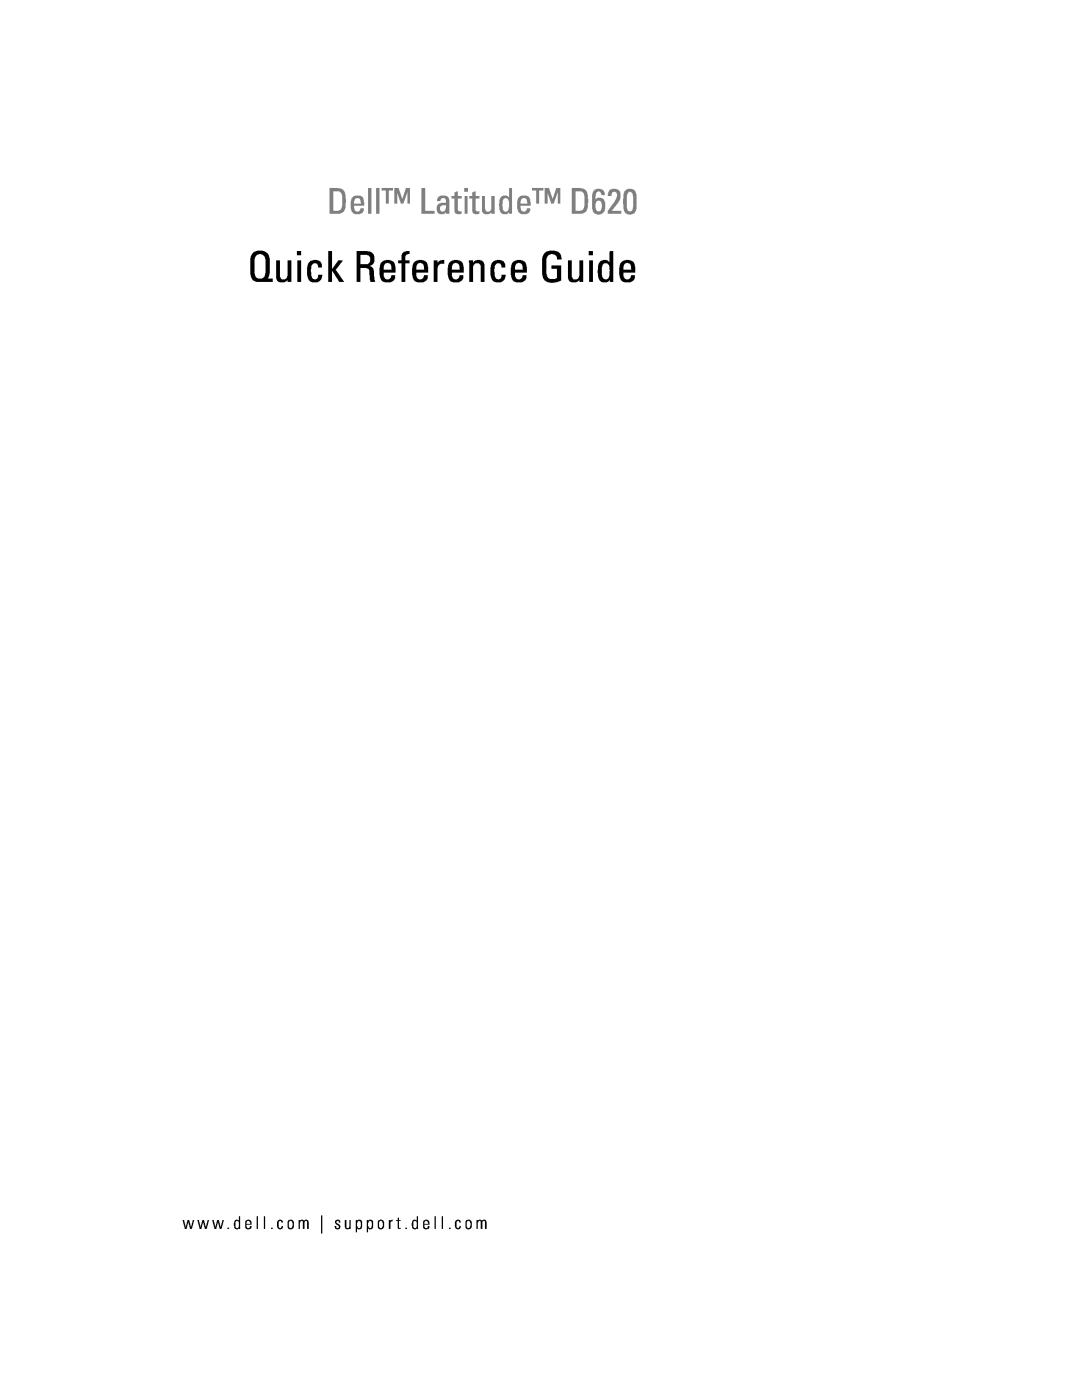 Dell manual Quick Reference Guide, Dell Latitude D620 